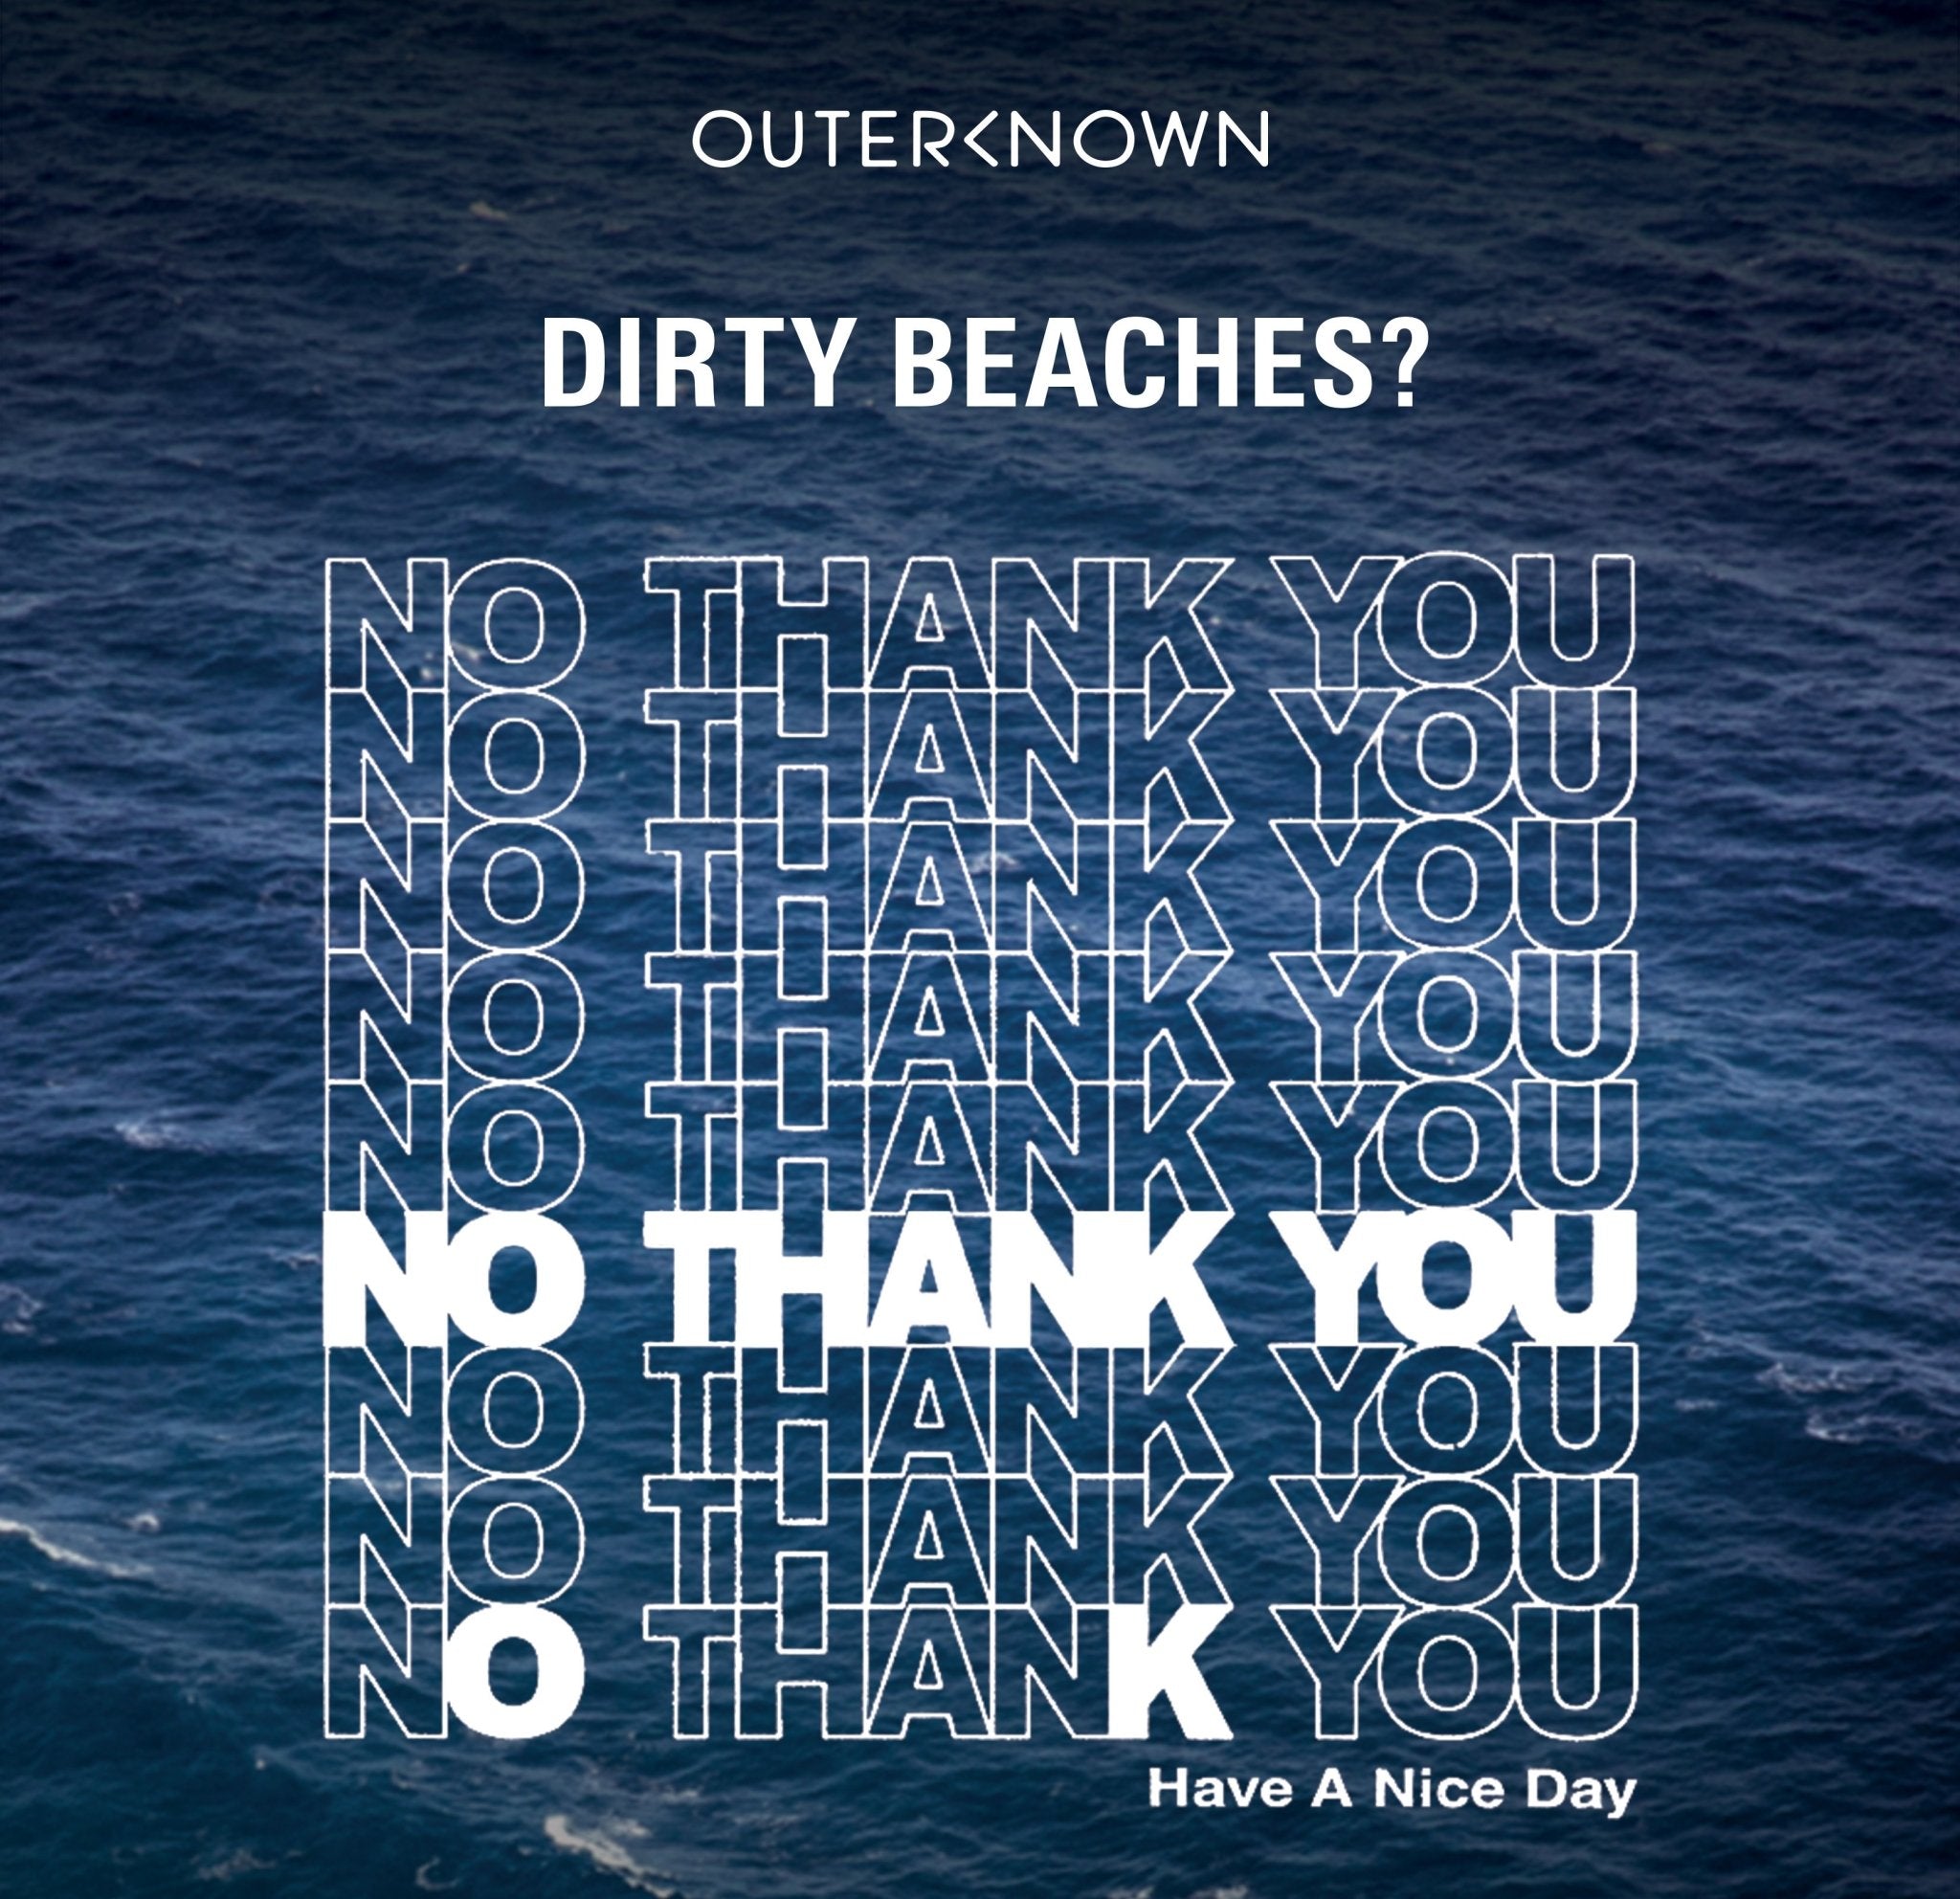 Outerknown Beach Cleanup - Huntington Beach | Jack's Surfboards